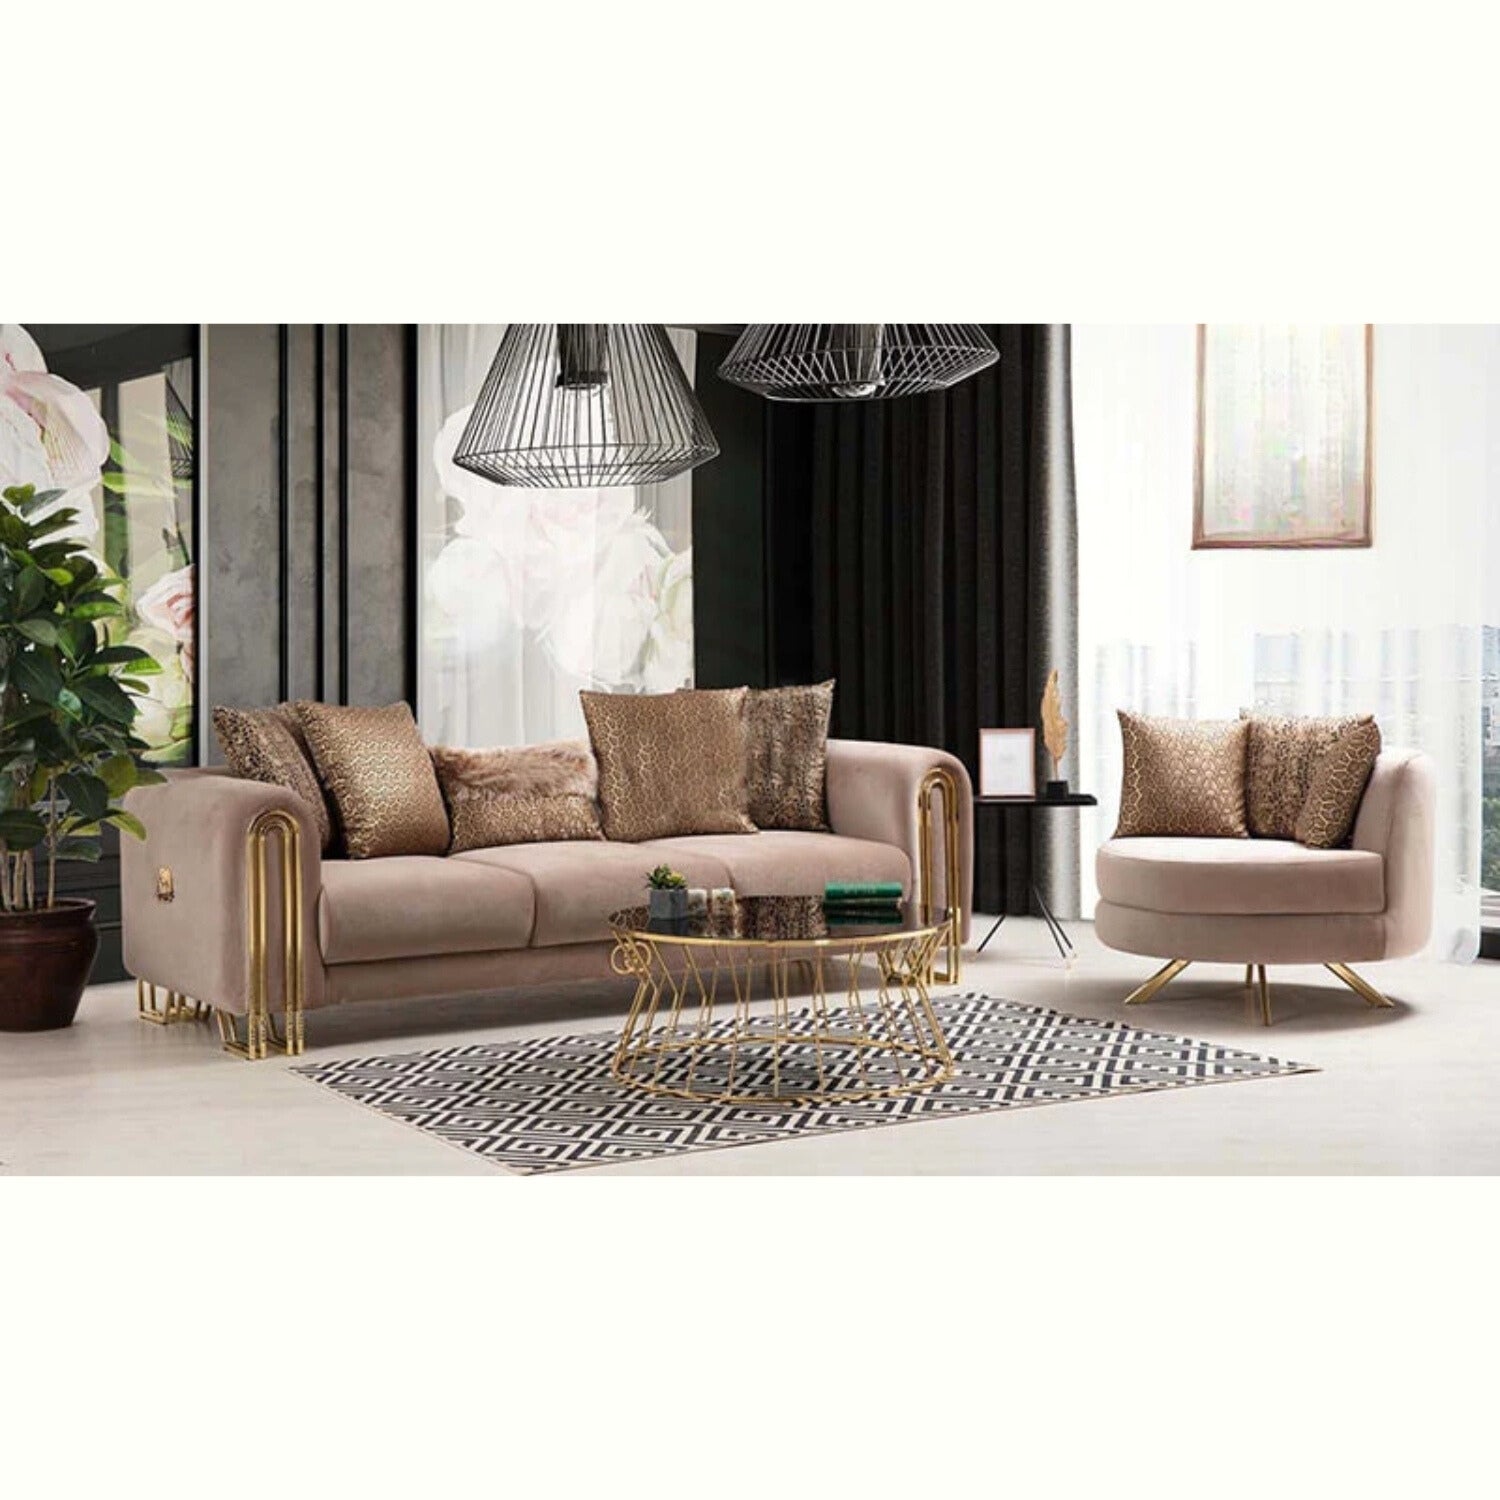 geneva sofa and armchair set gold metal base lifestyle image